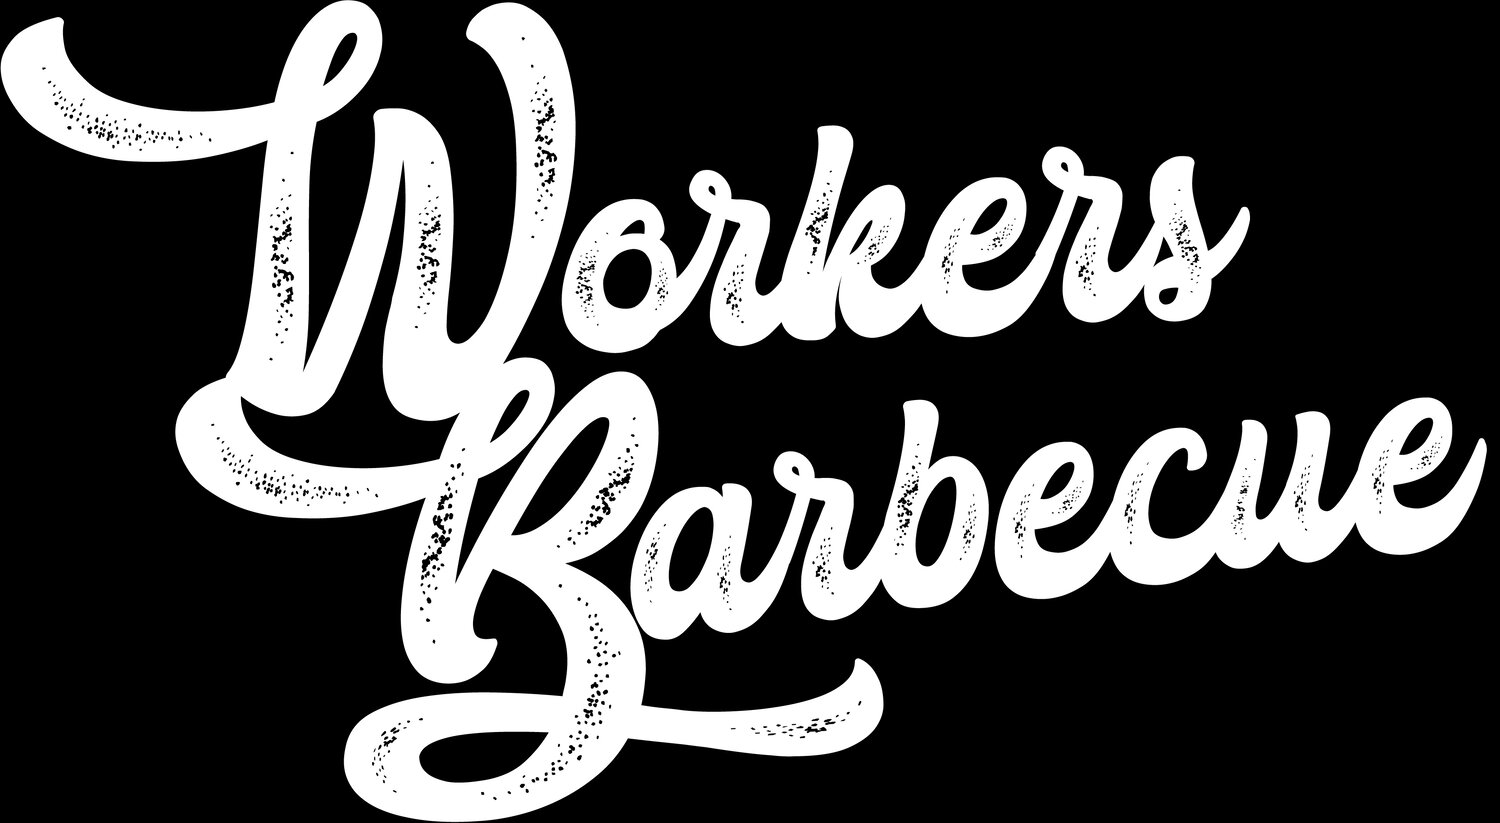 Workers Barbecue Website